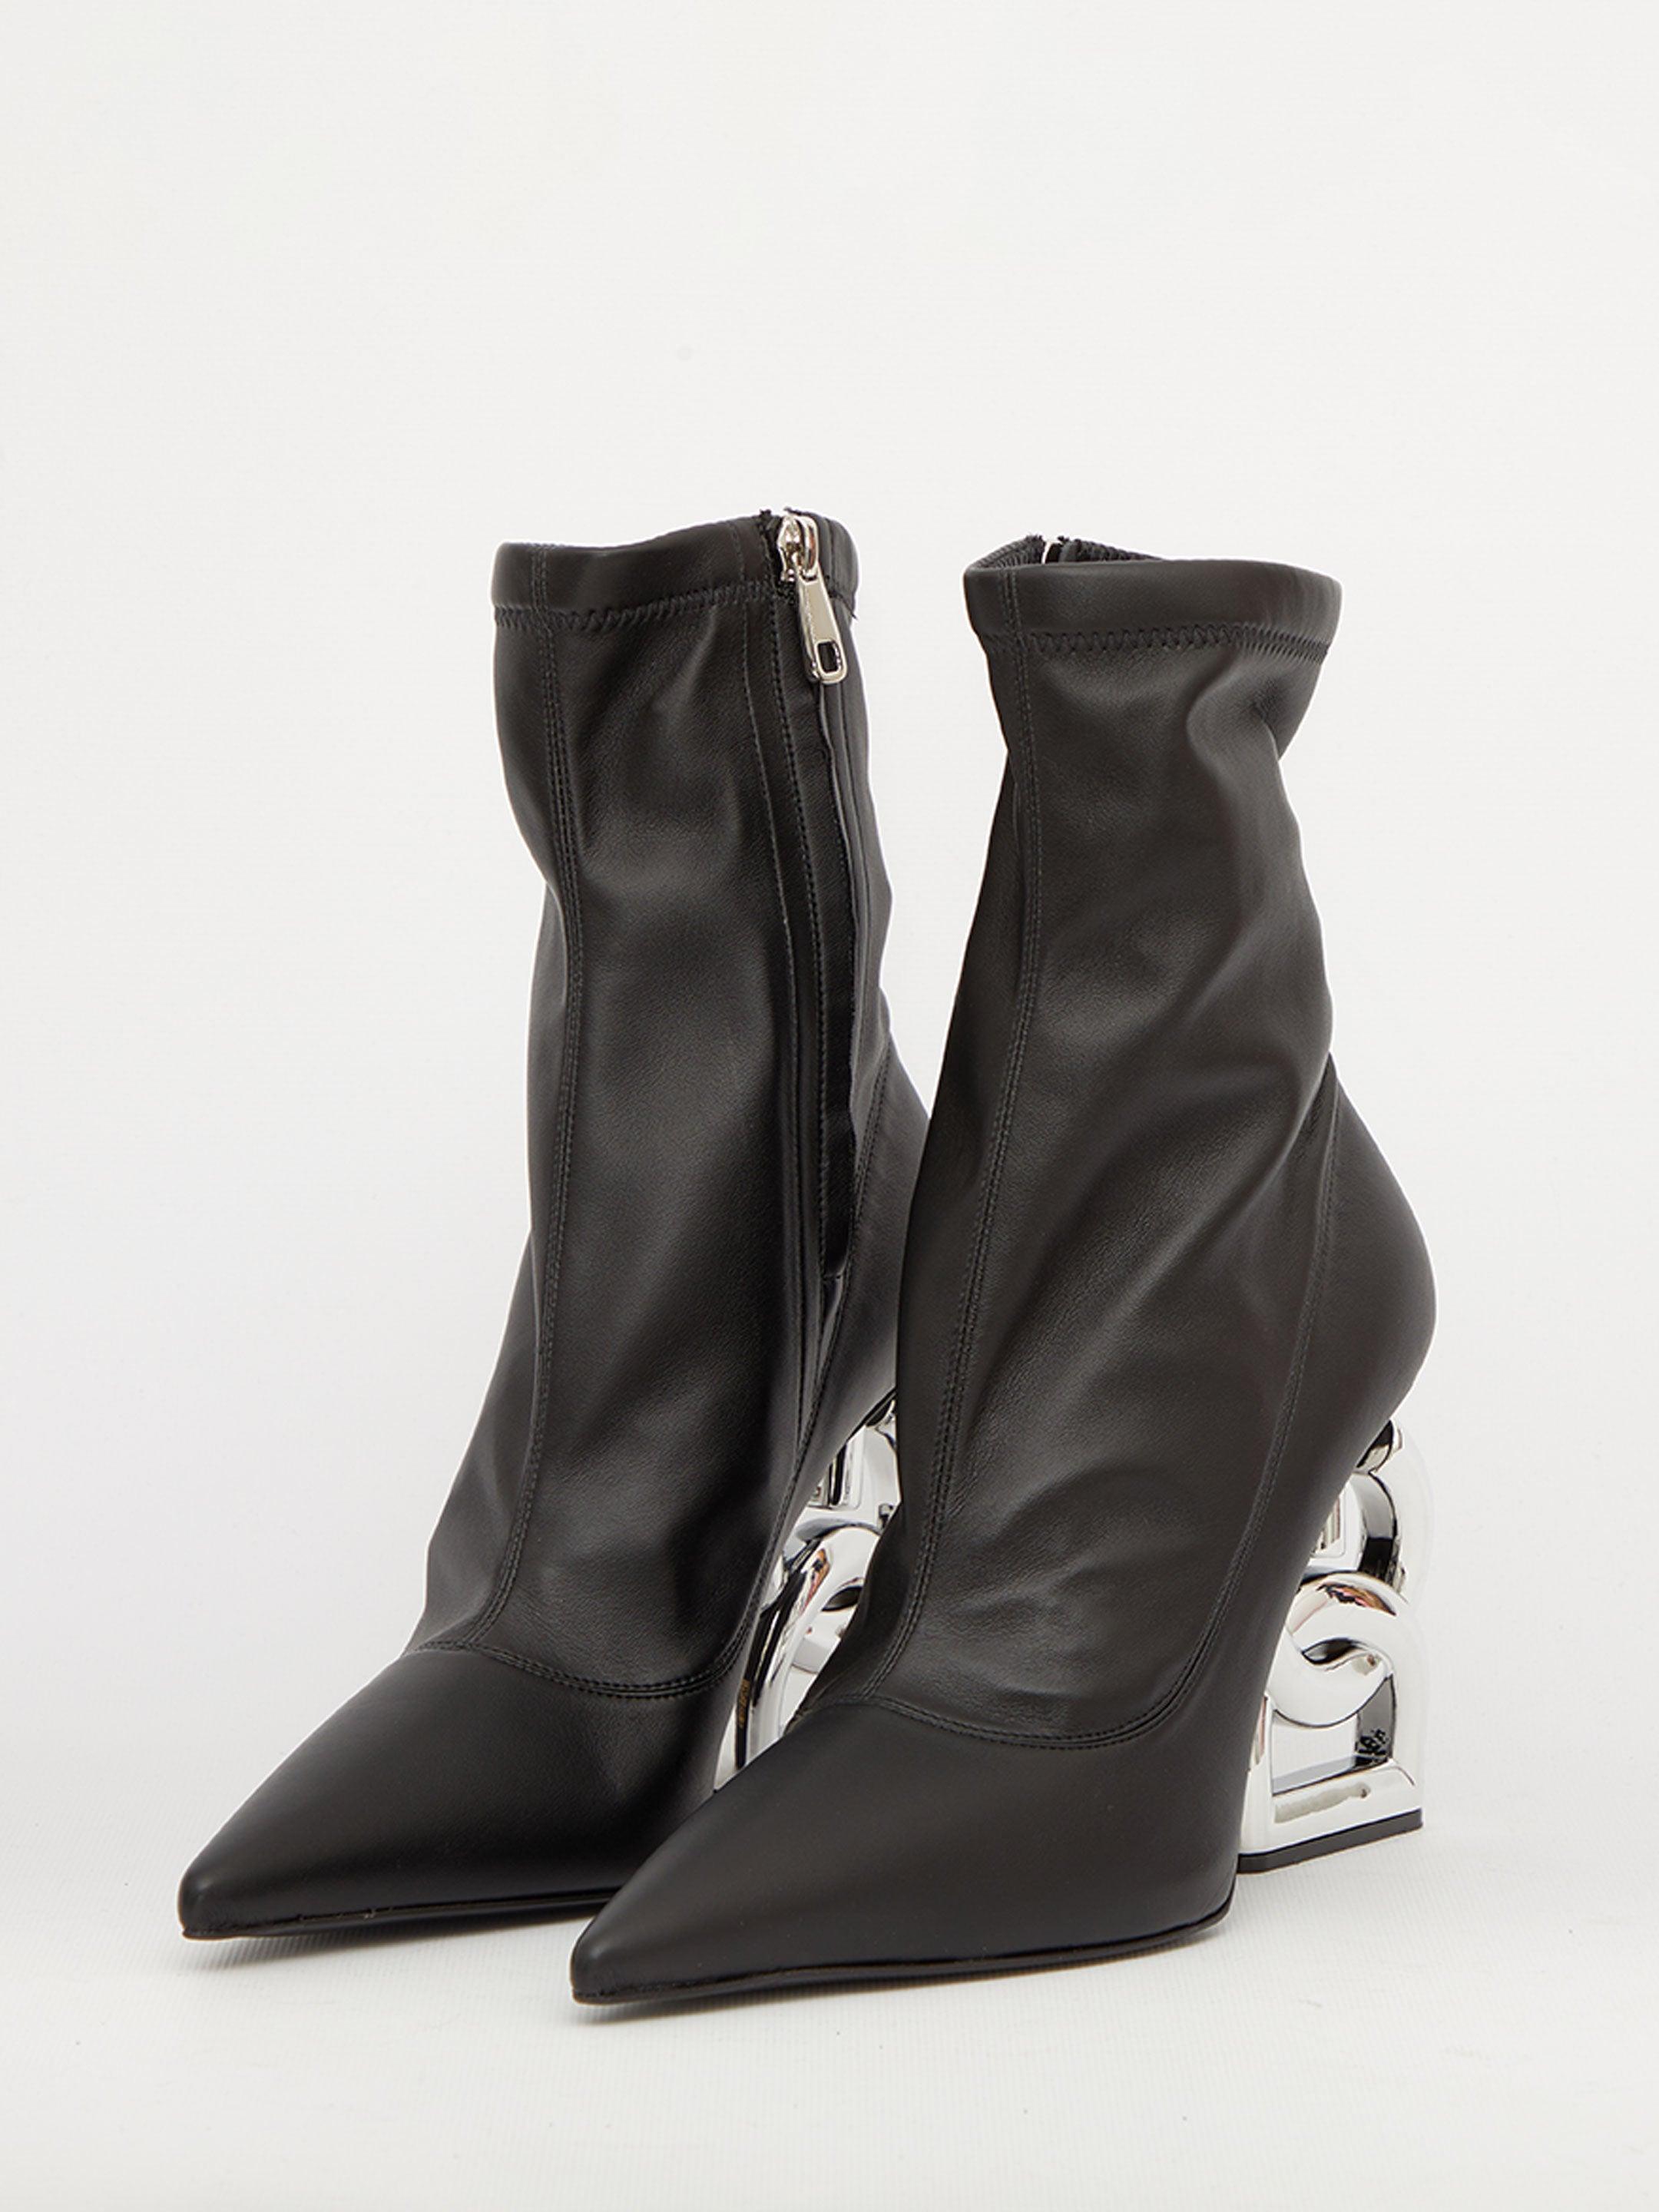 Dolce & Gabbana Dg Pop Ankle Boots in Black | Lyst